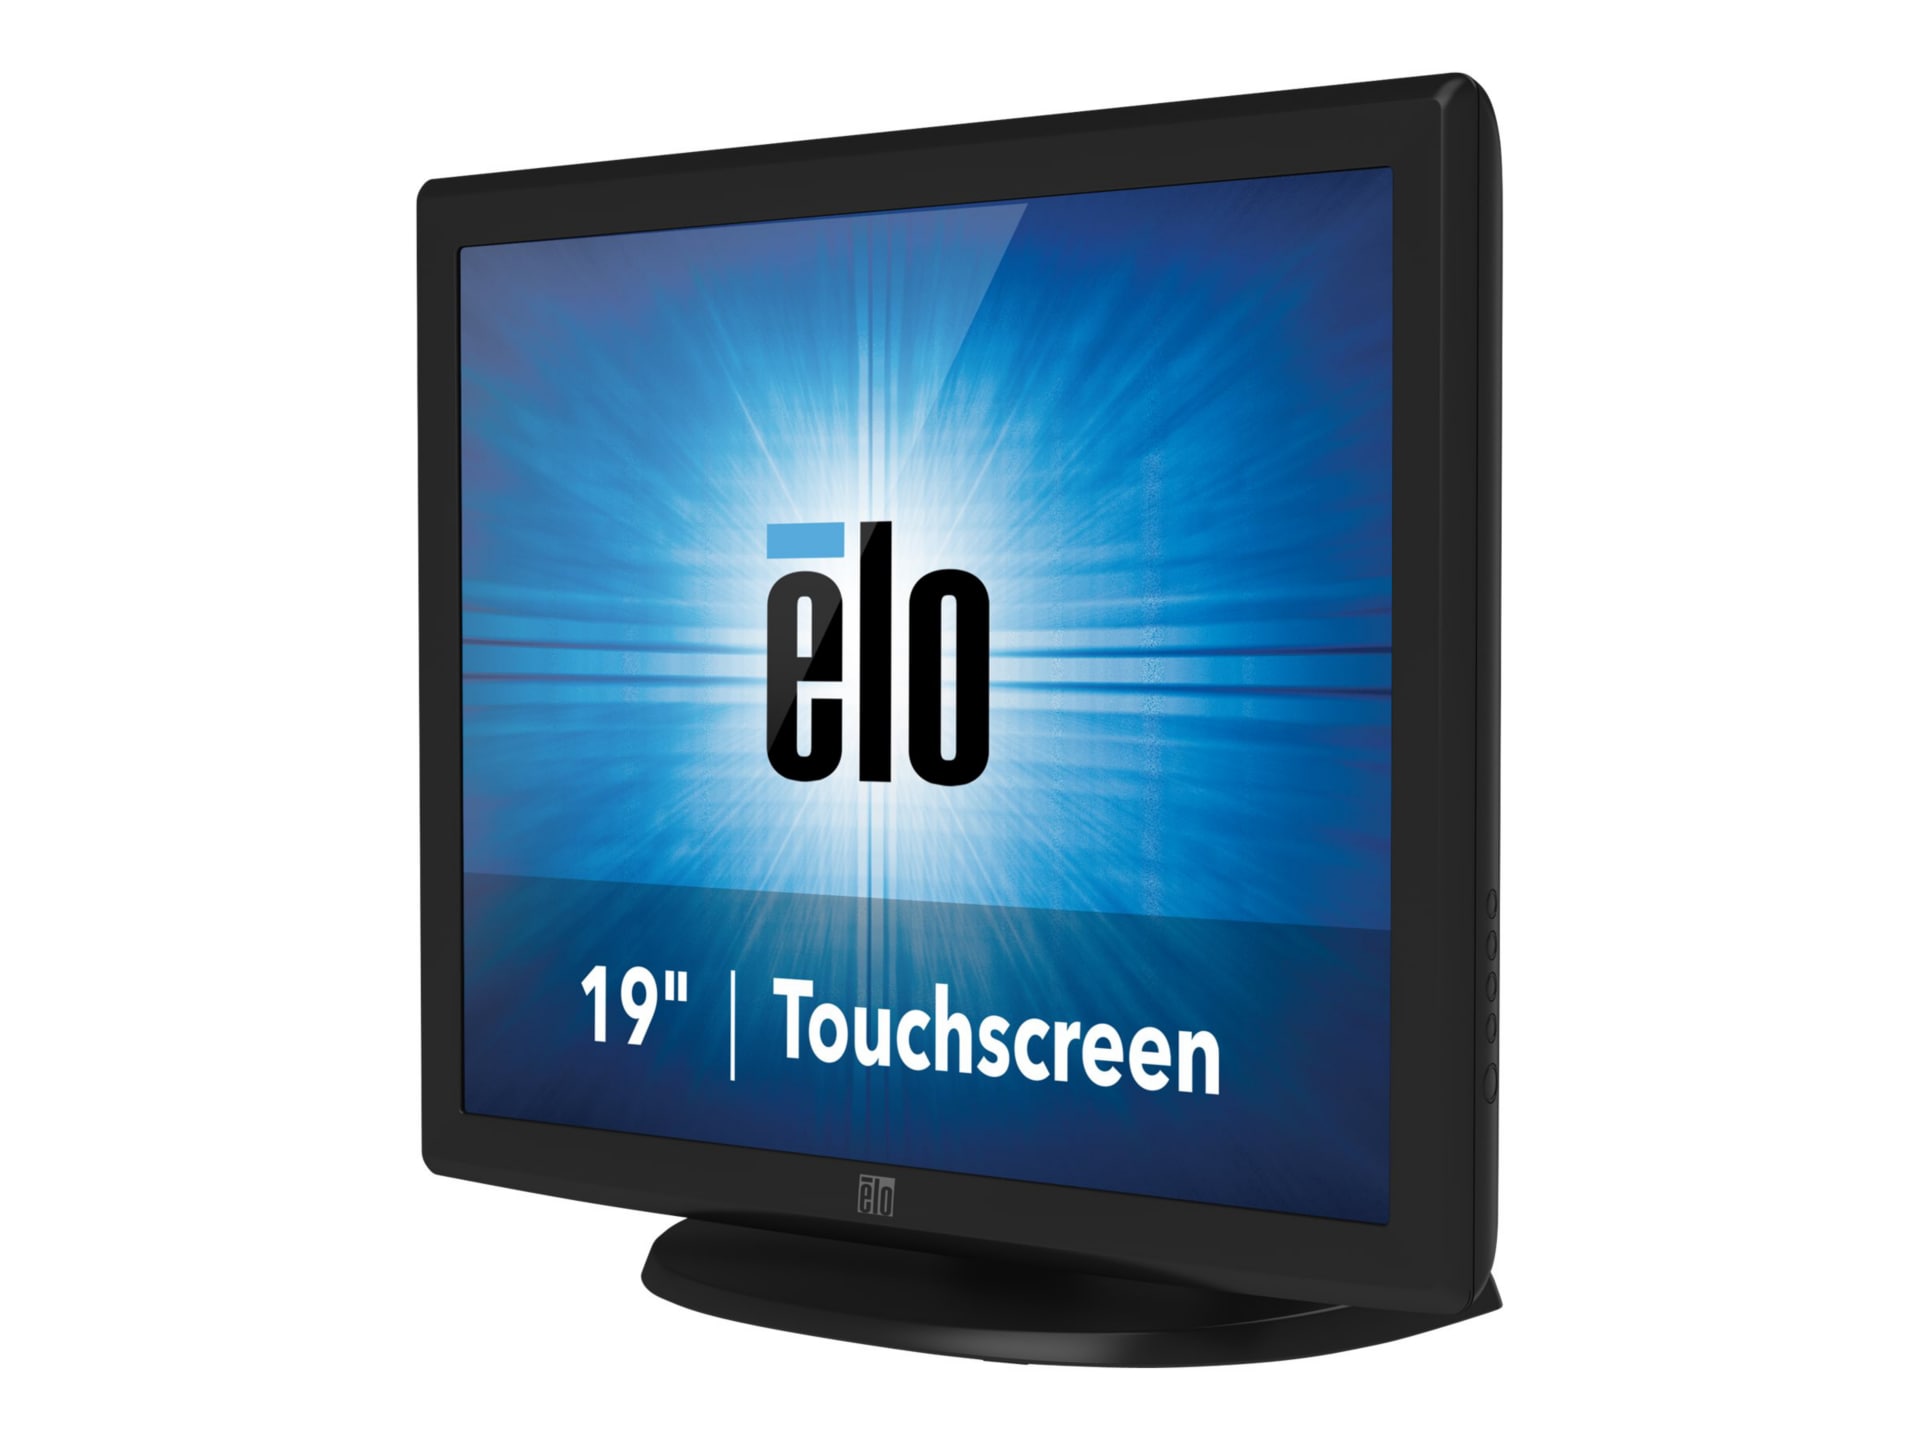 Elo 1915L - 19" Touchscreen Monitor